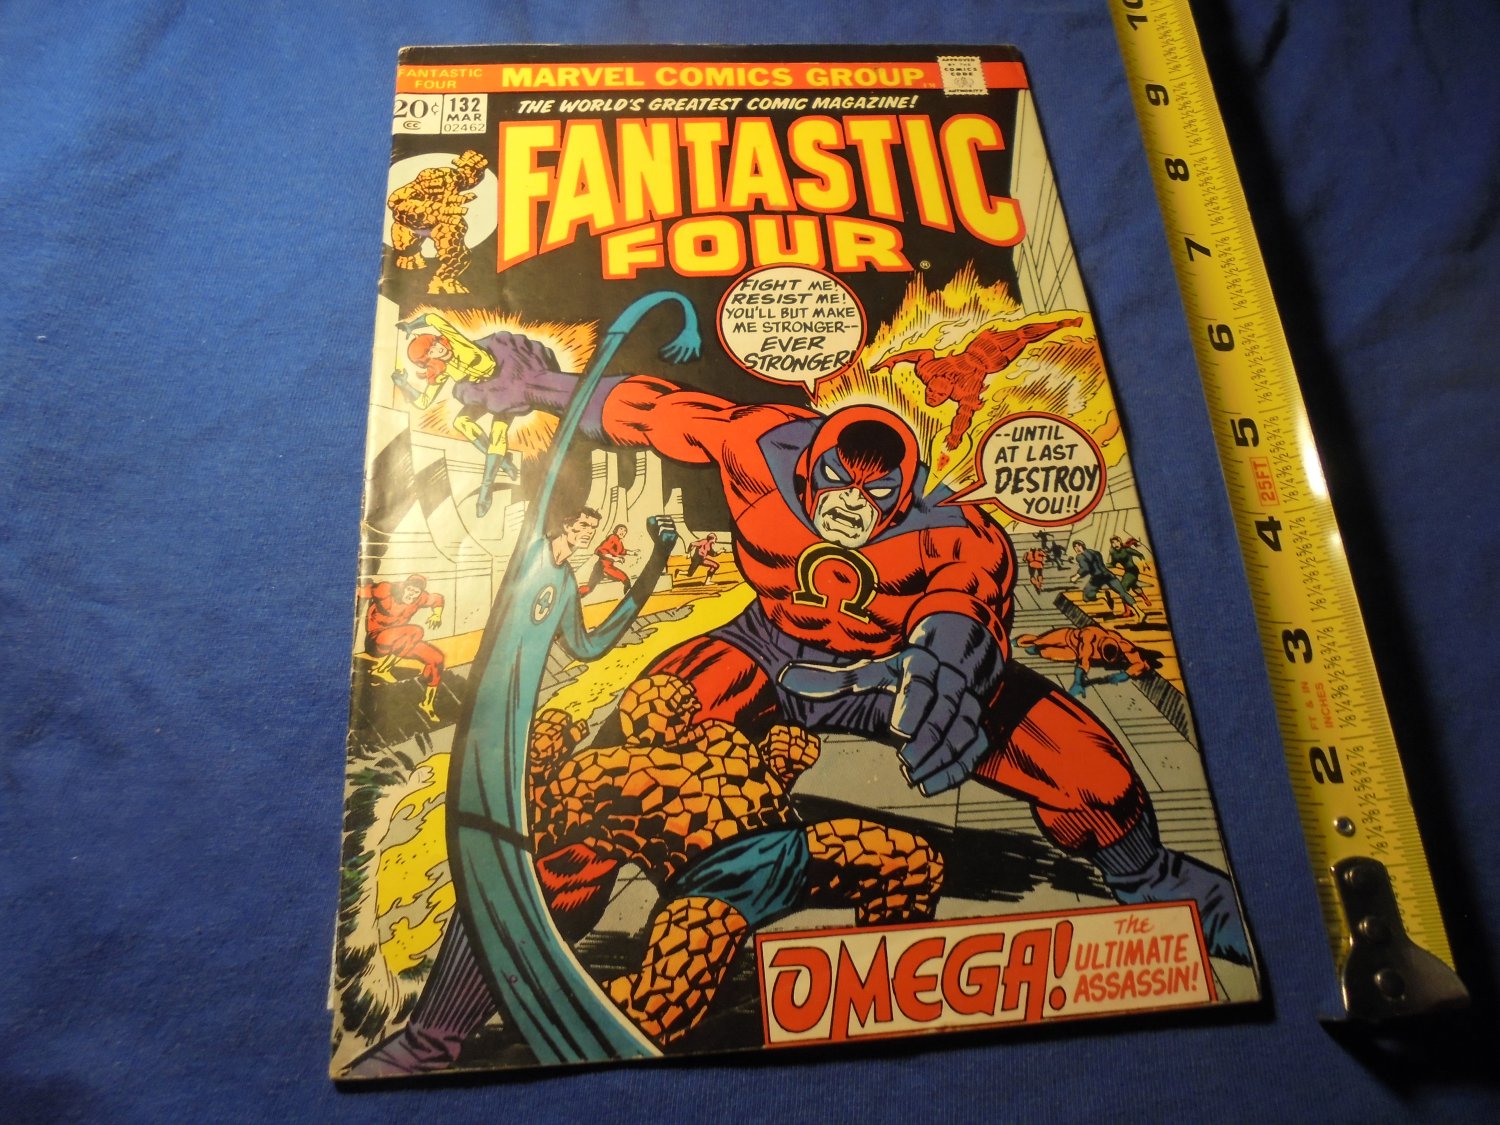 FANTASTIC FOUR # 132 - Steranko Cover!! Marvel Comics, March 1973!! VG/FN $15.00!!